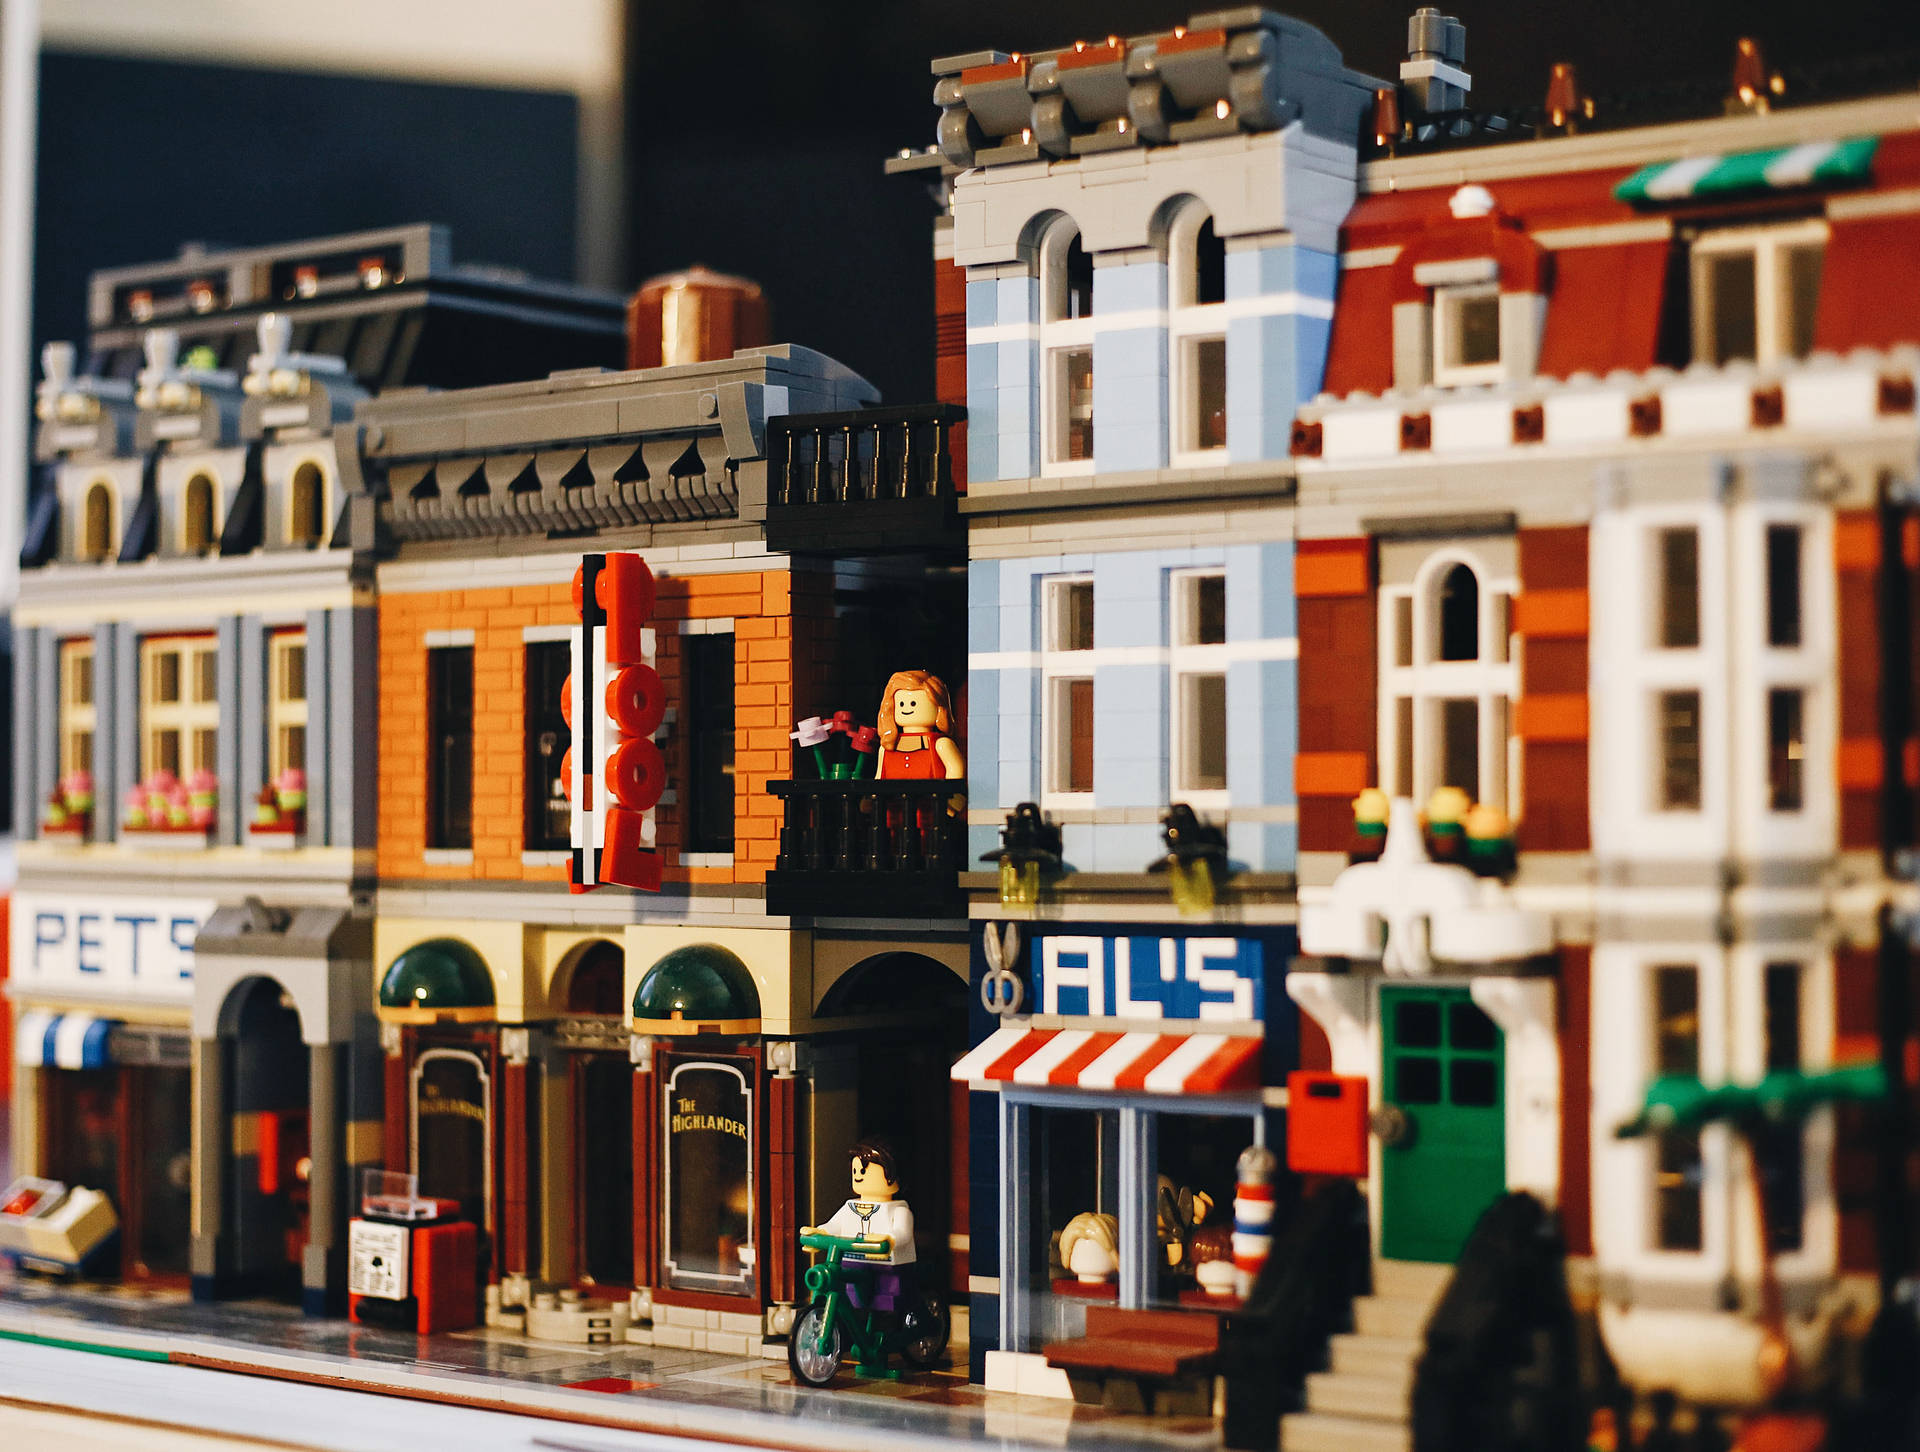 Lego City Street Scene SVG